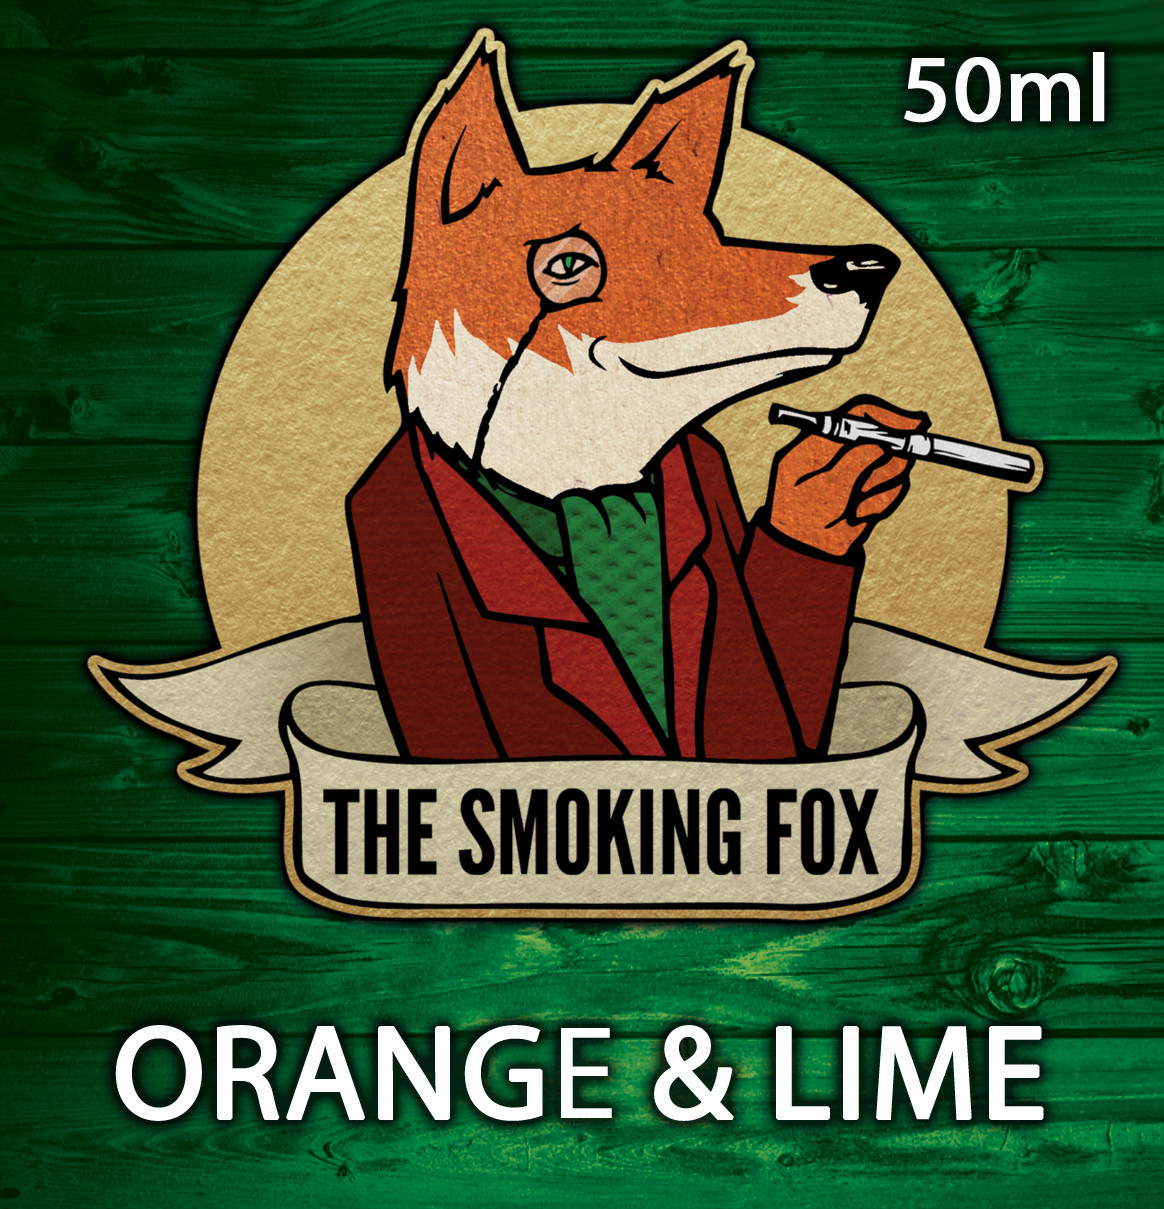 THE SMOKING FOX 50ml - ORANGE & LIME